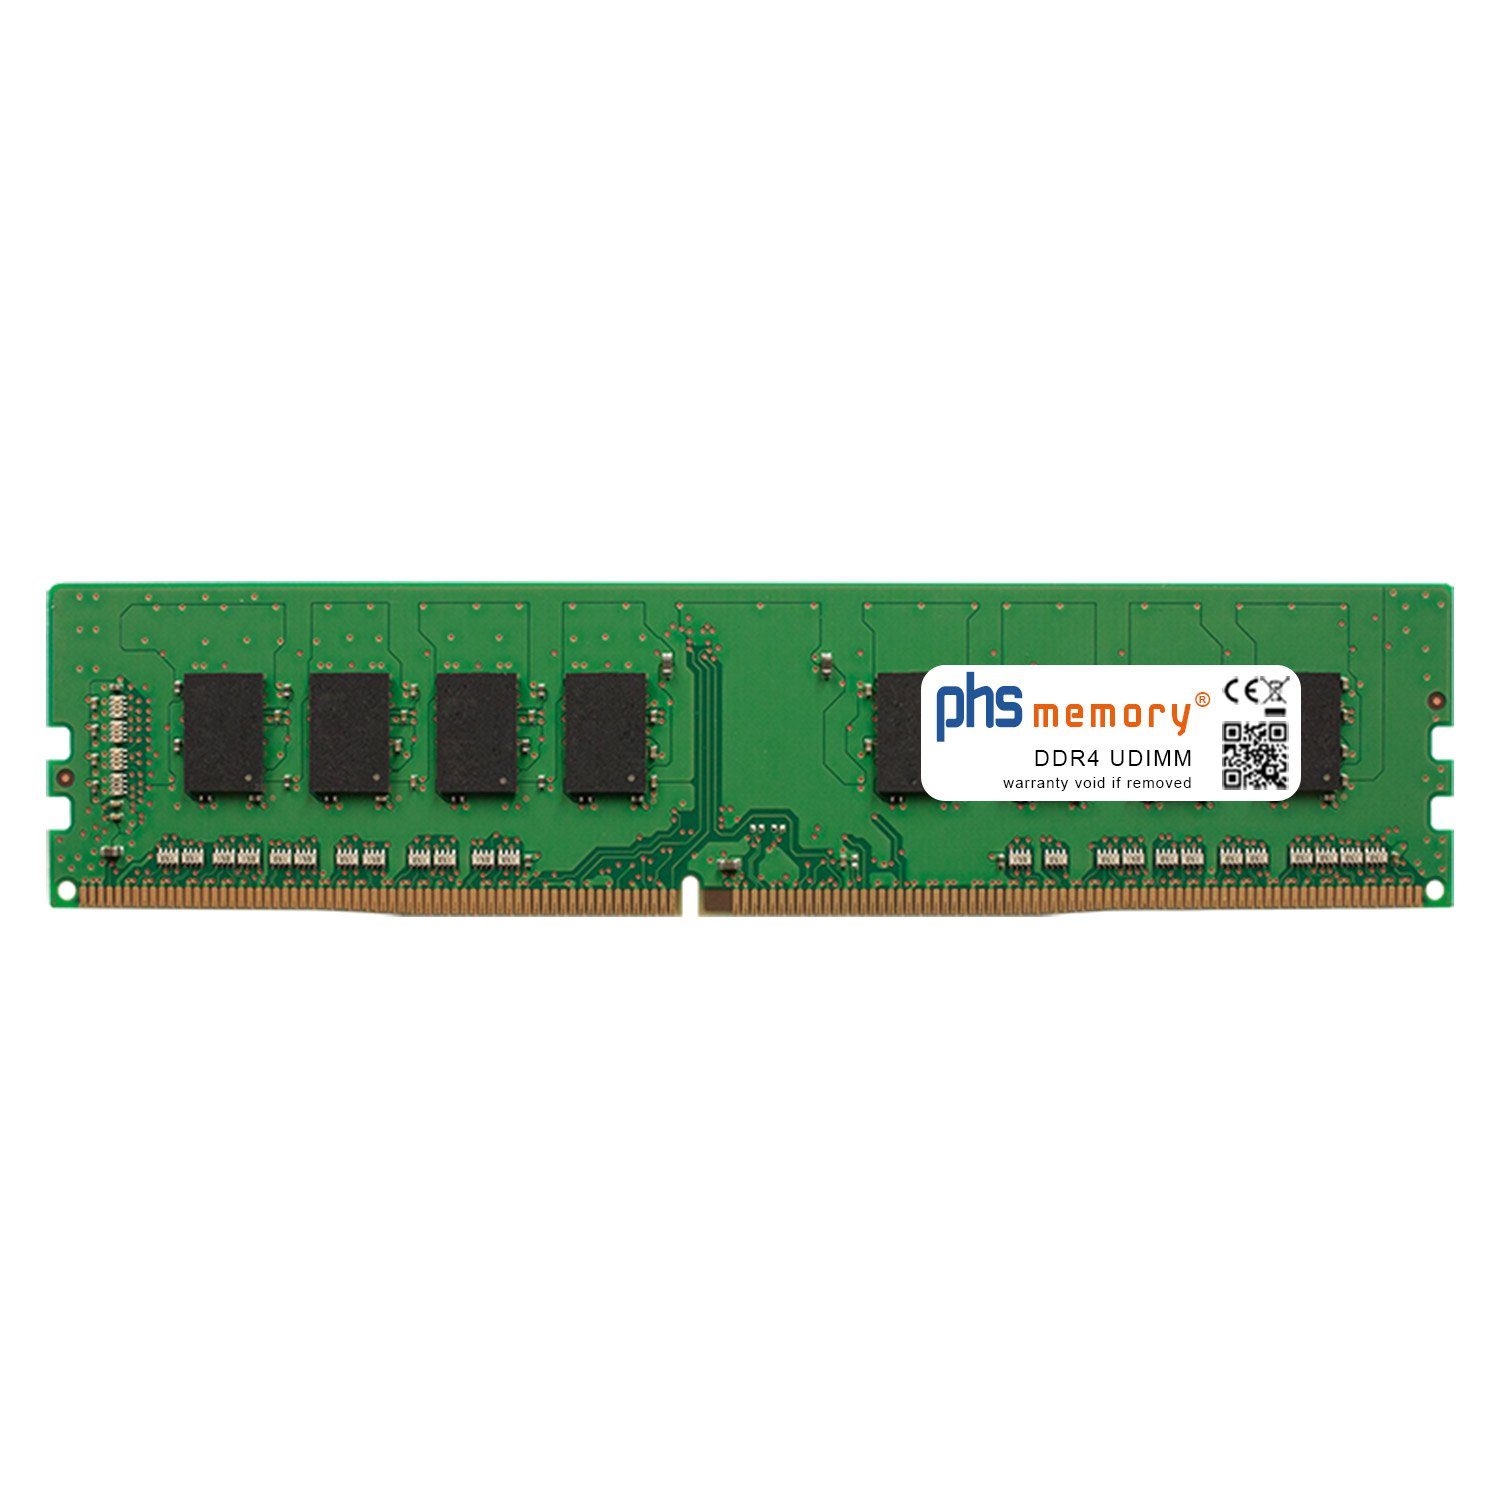 PHS-memory RAM für Captiva Power Starter I65-022 Arbeitsspeicher